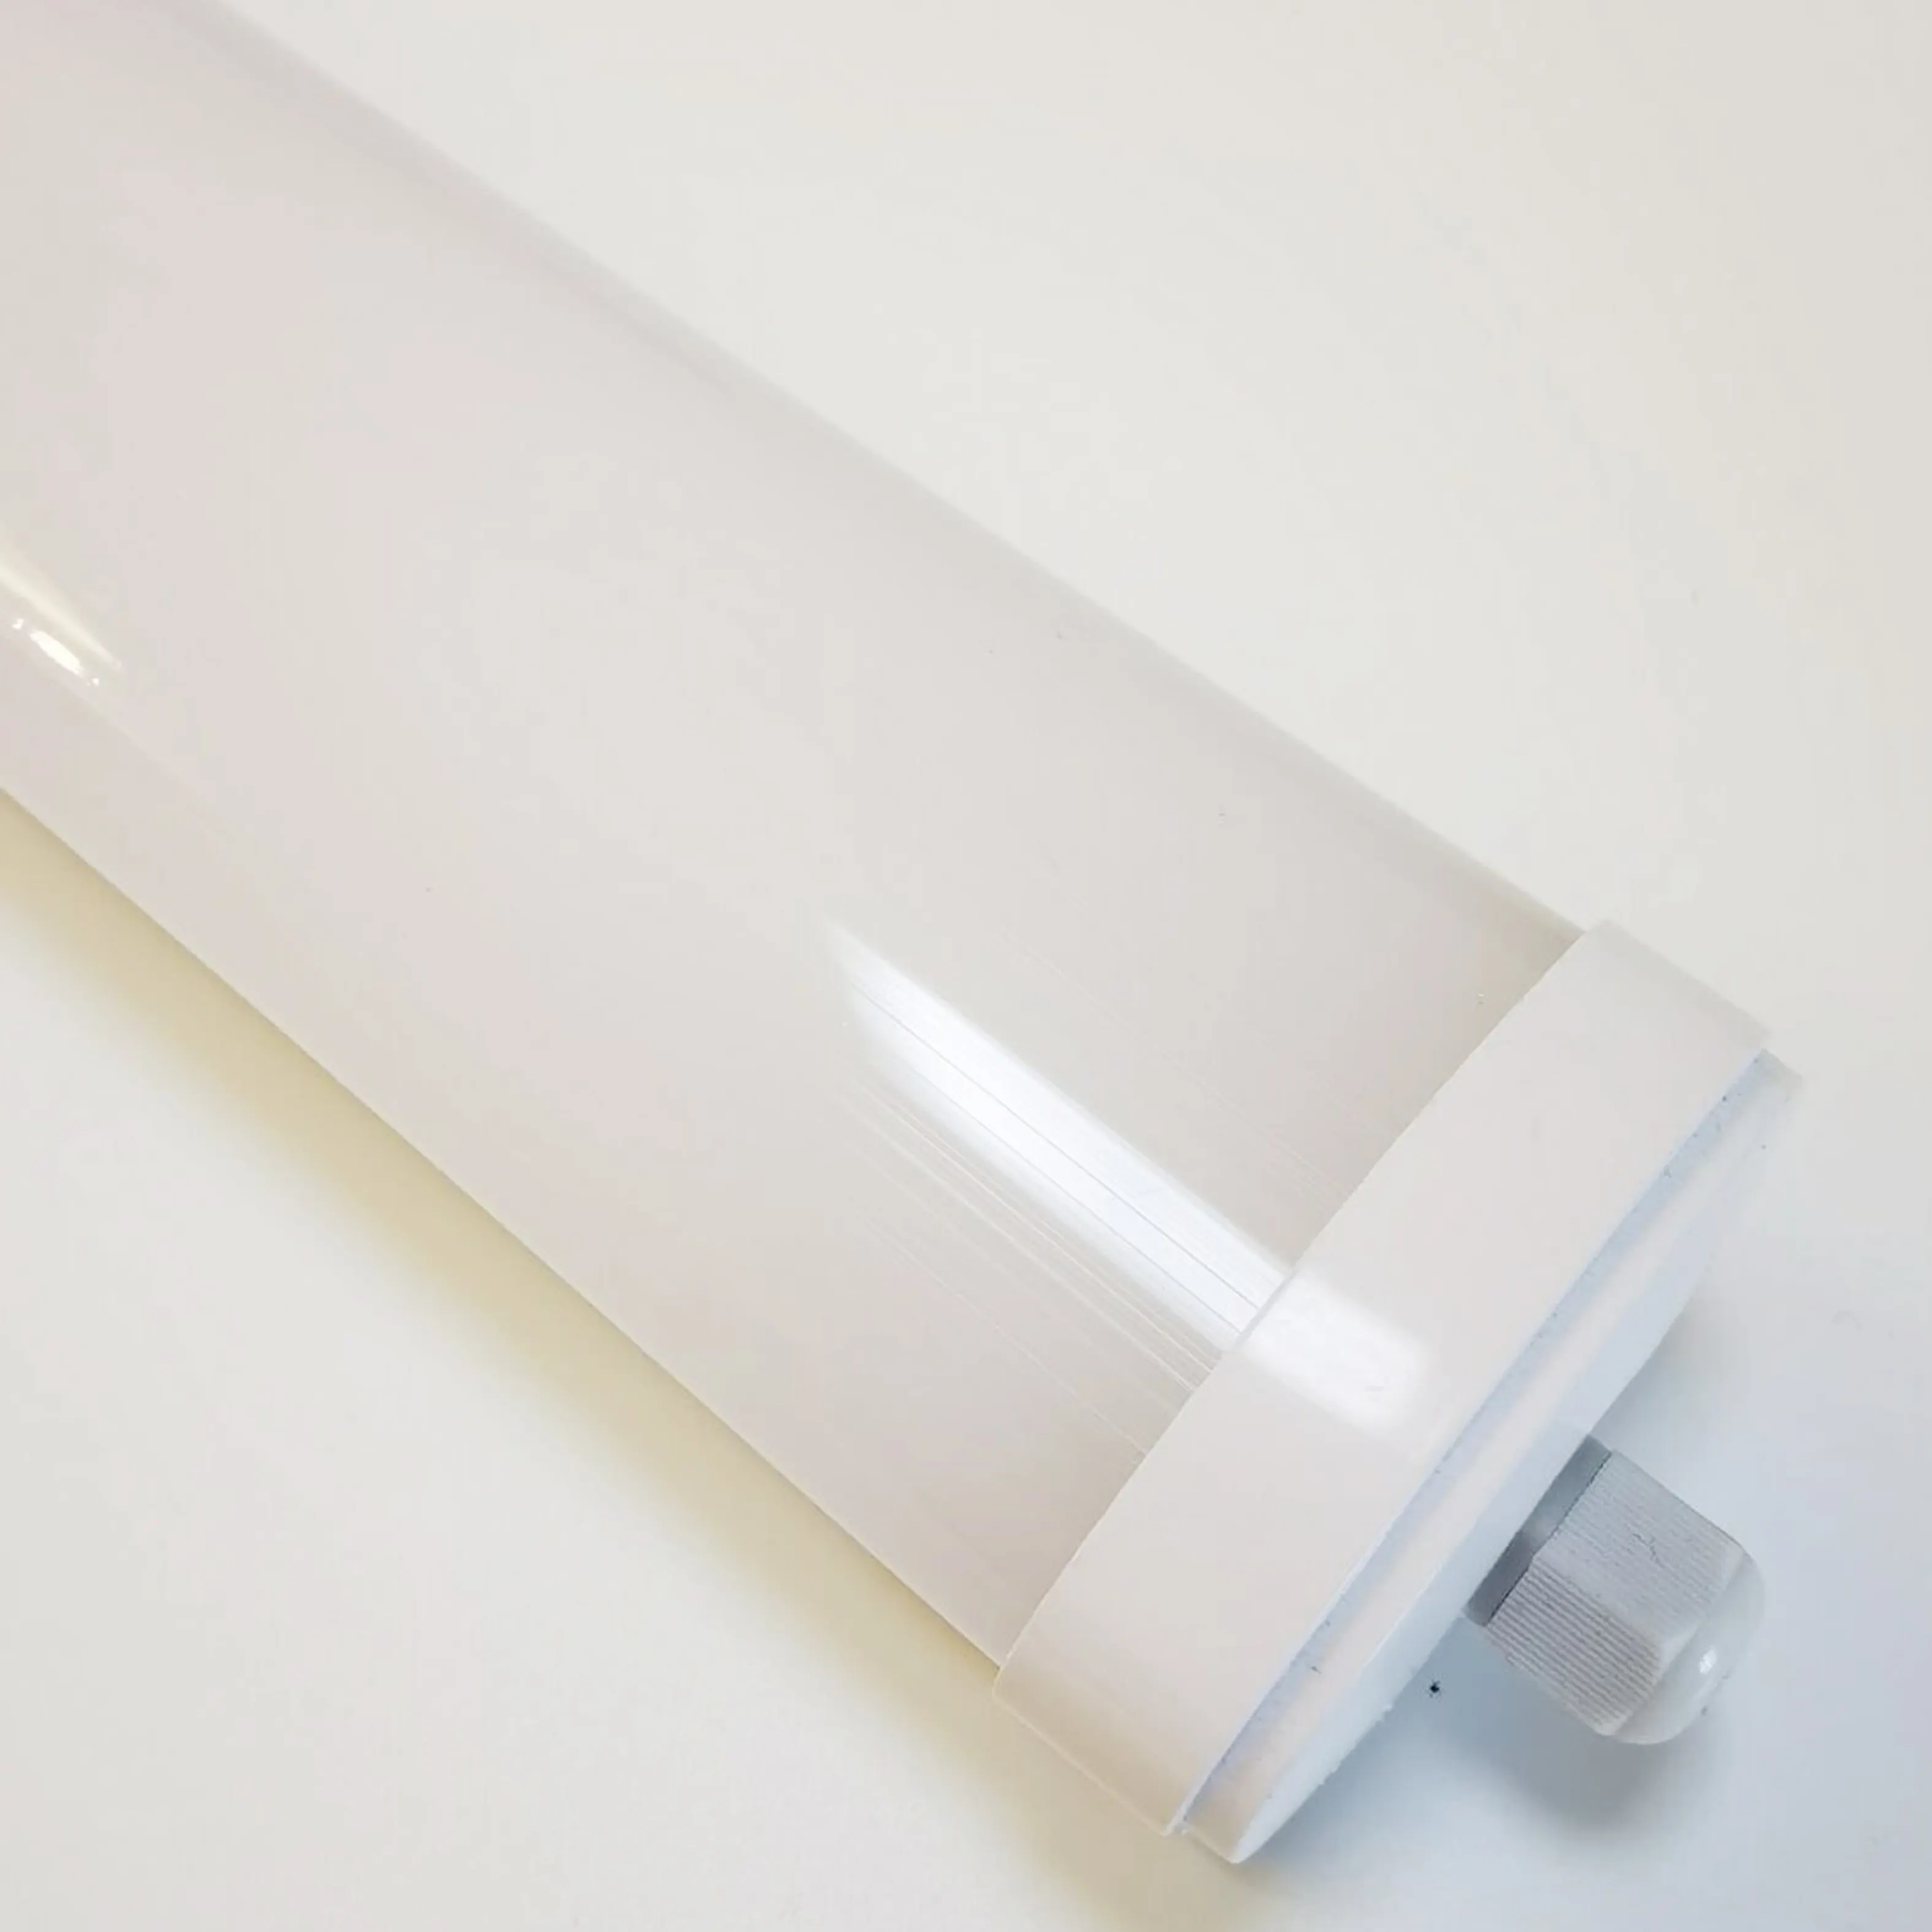 IP66 1200mm Waterproof Dustproof Pressure Proof Vapour Proof LED Vapor Tight Tri-proof LED Linear Light fixture